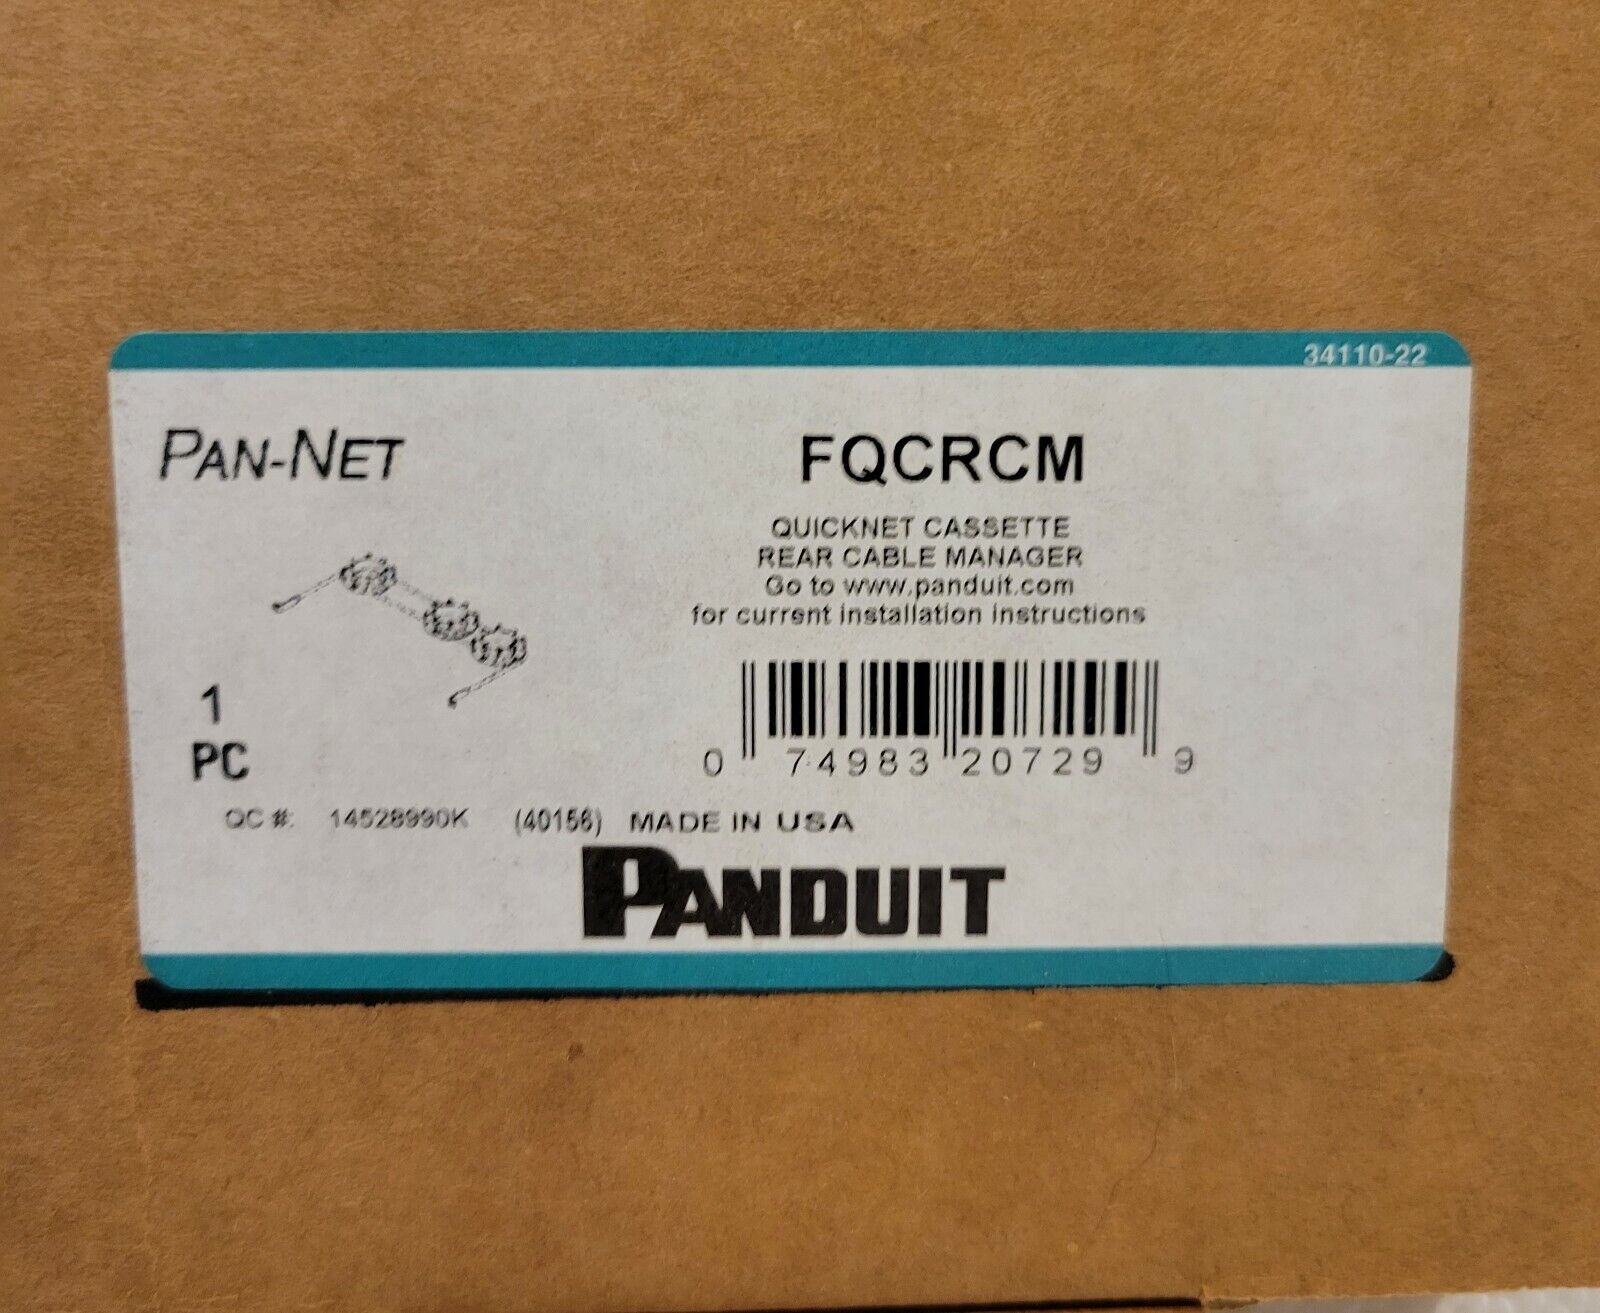 FQCRCM--PANDUIT--Quicknet Cassette Rear Cable Manager--NEW IN BOX